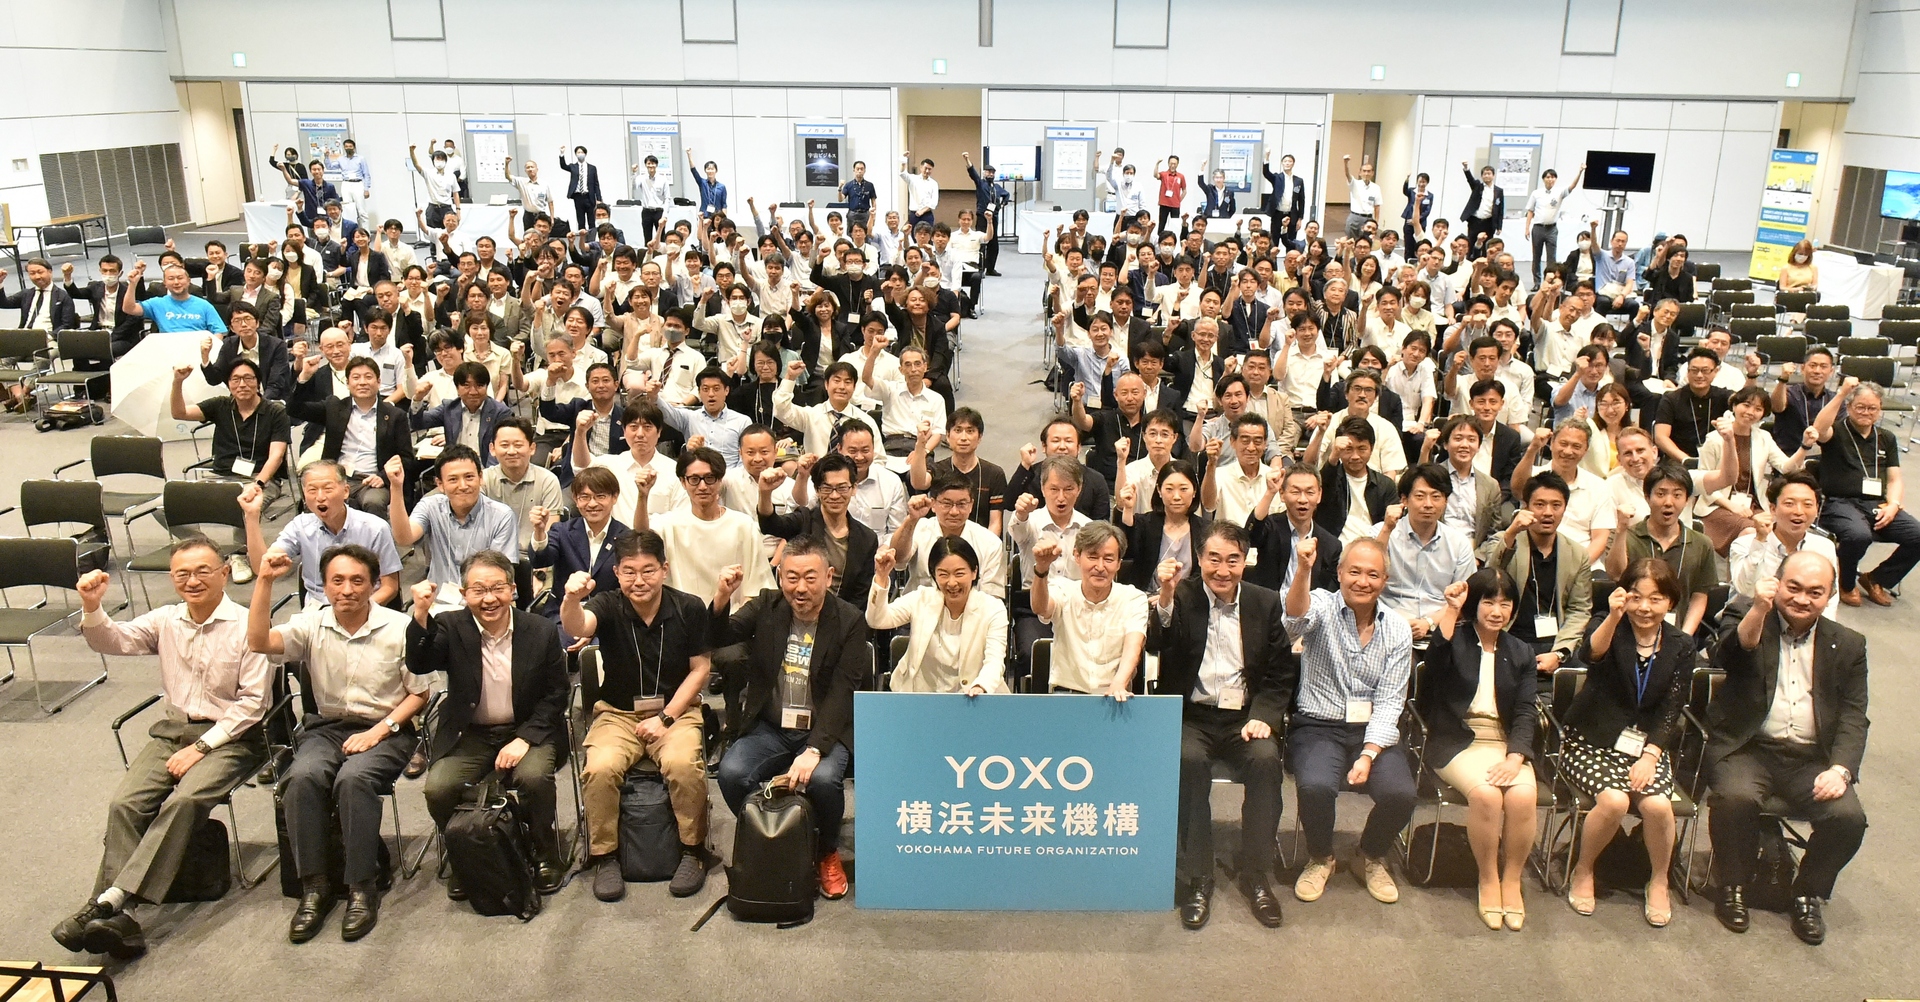 Regional Business Conference Yokohama Innovators